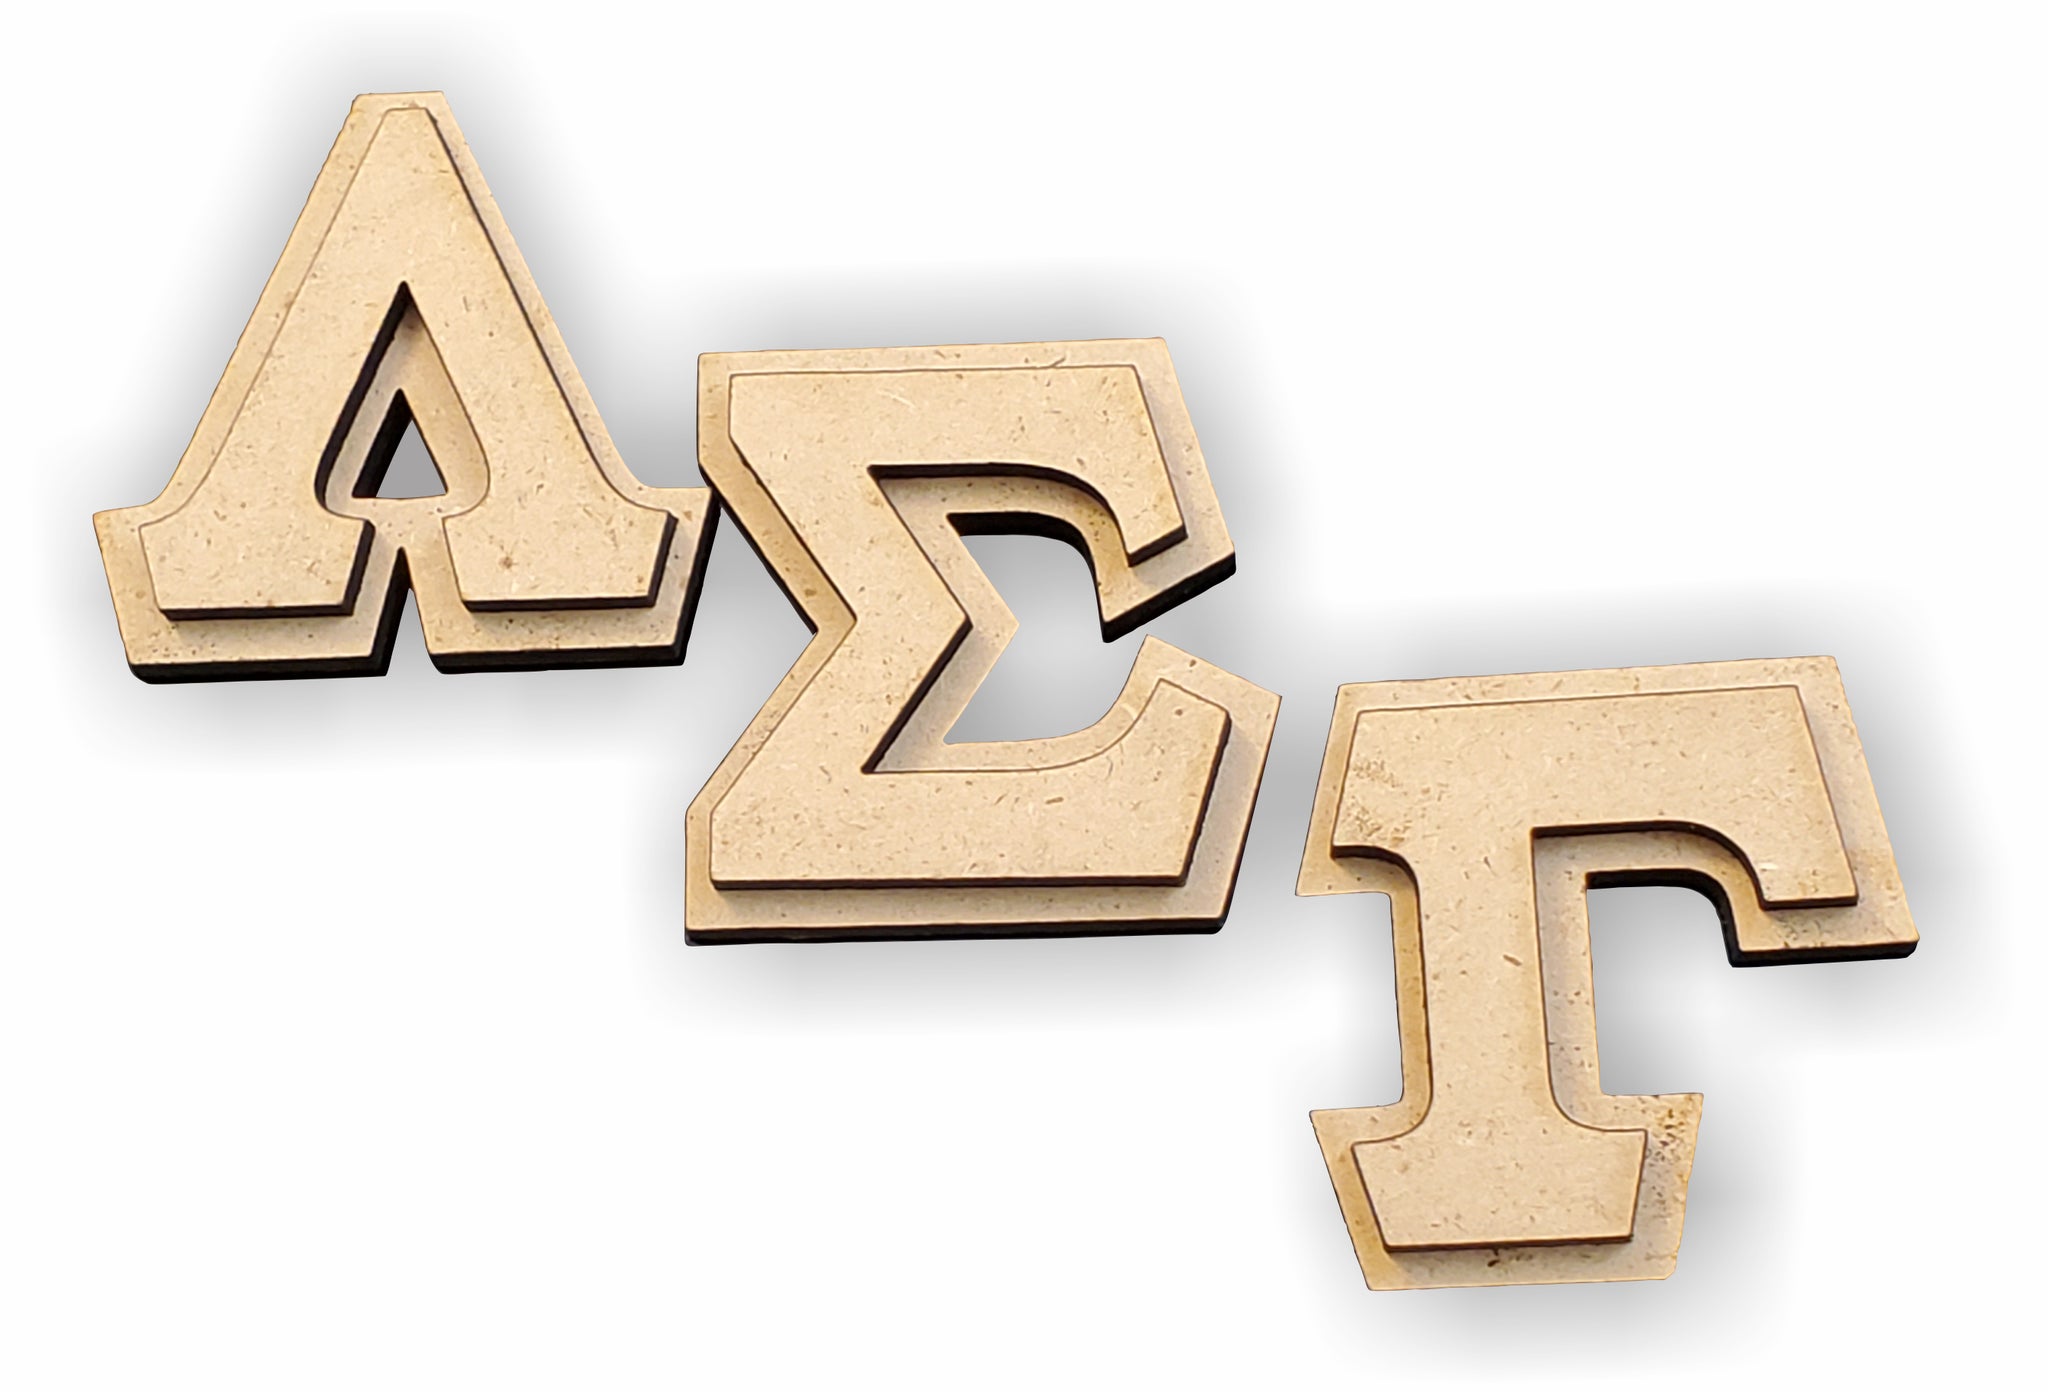 Sigma Lambda Gamma-Pin, Magnetic, Greek Letters-SLG-PIN – Greek Apparel and  Hobbies